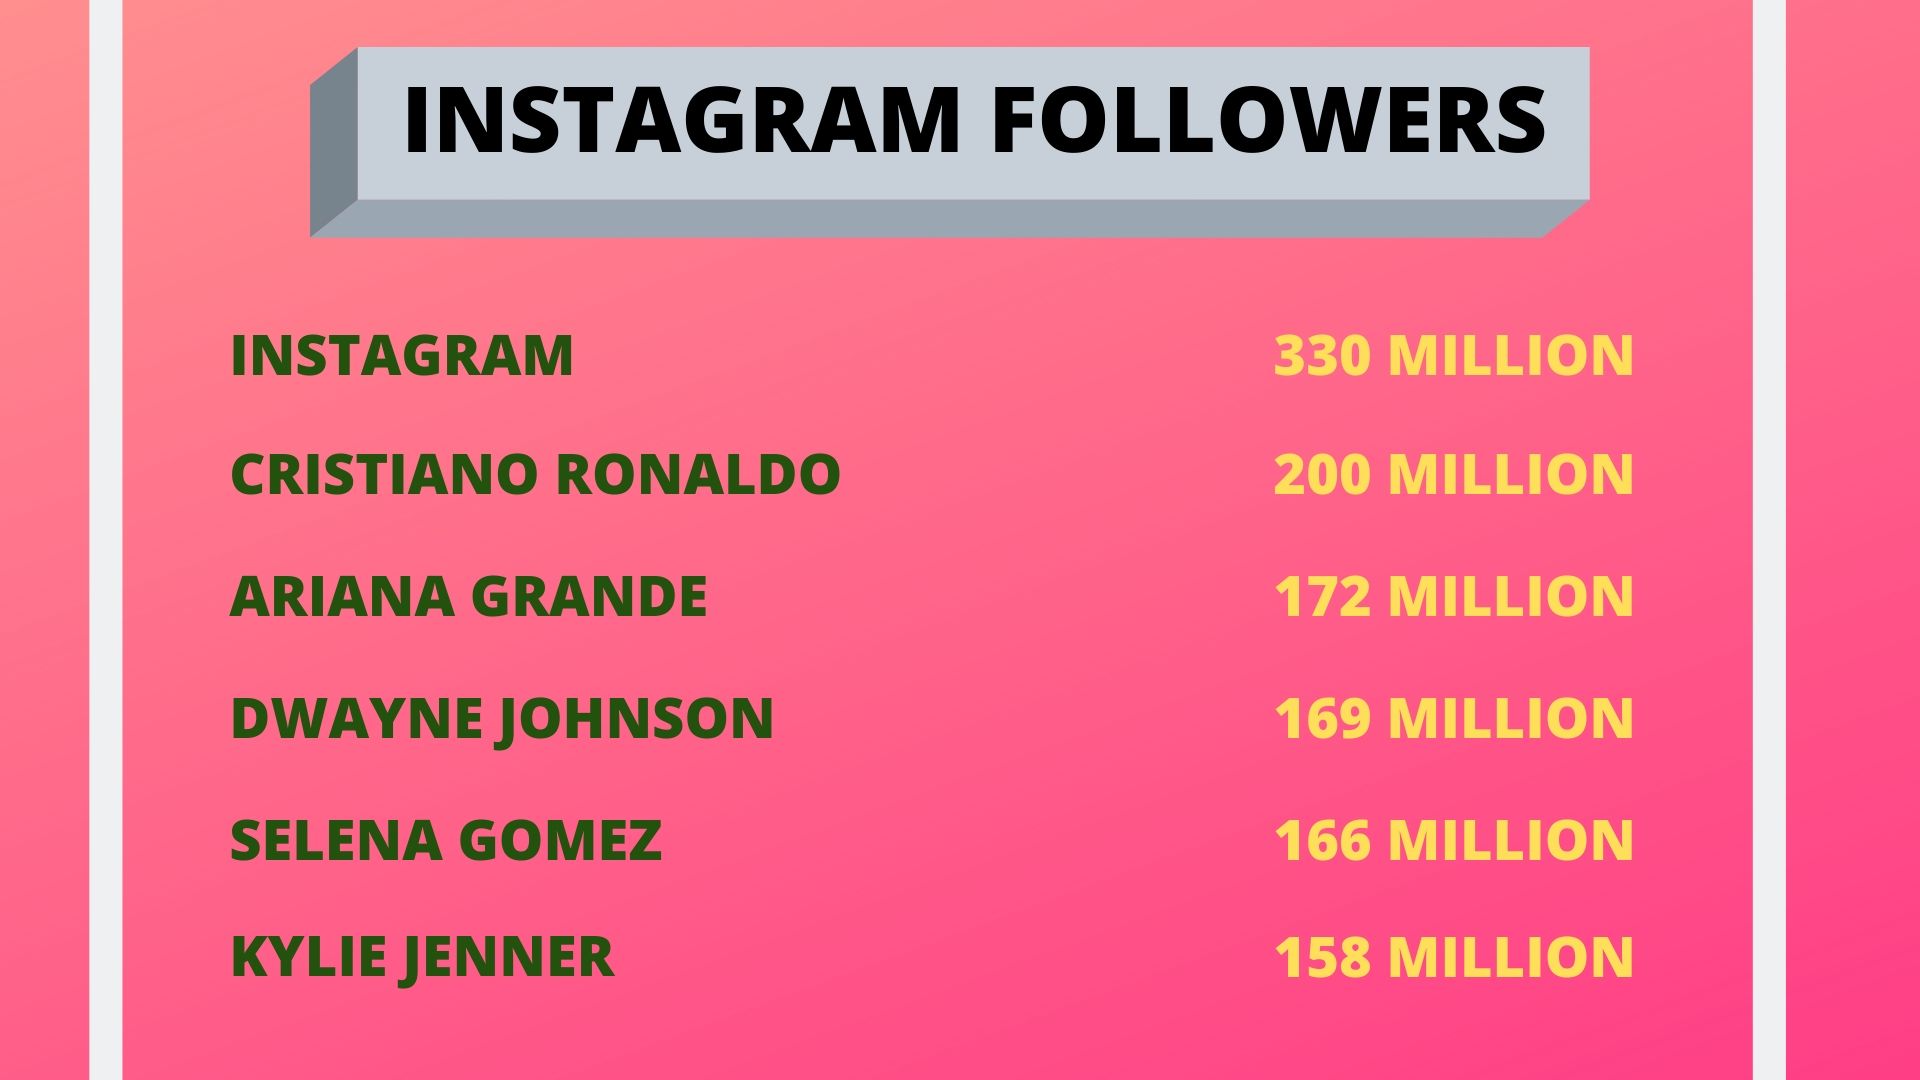 Cristiano Ronaldo 200 Million Instagram Followers